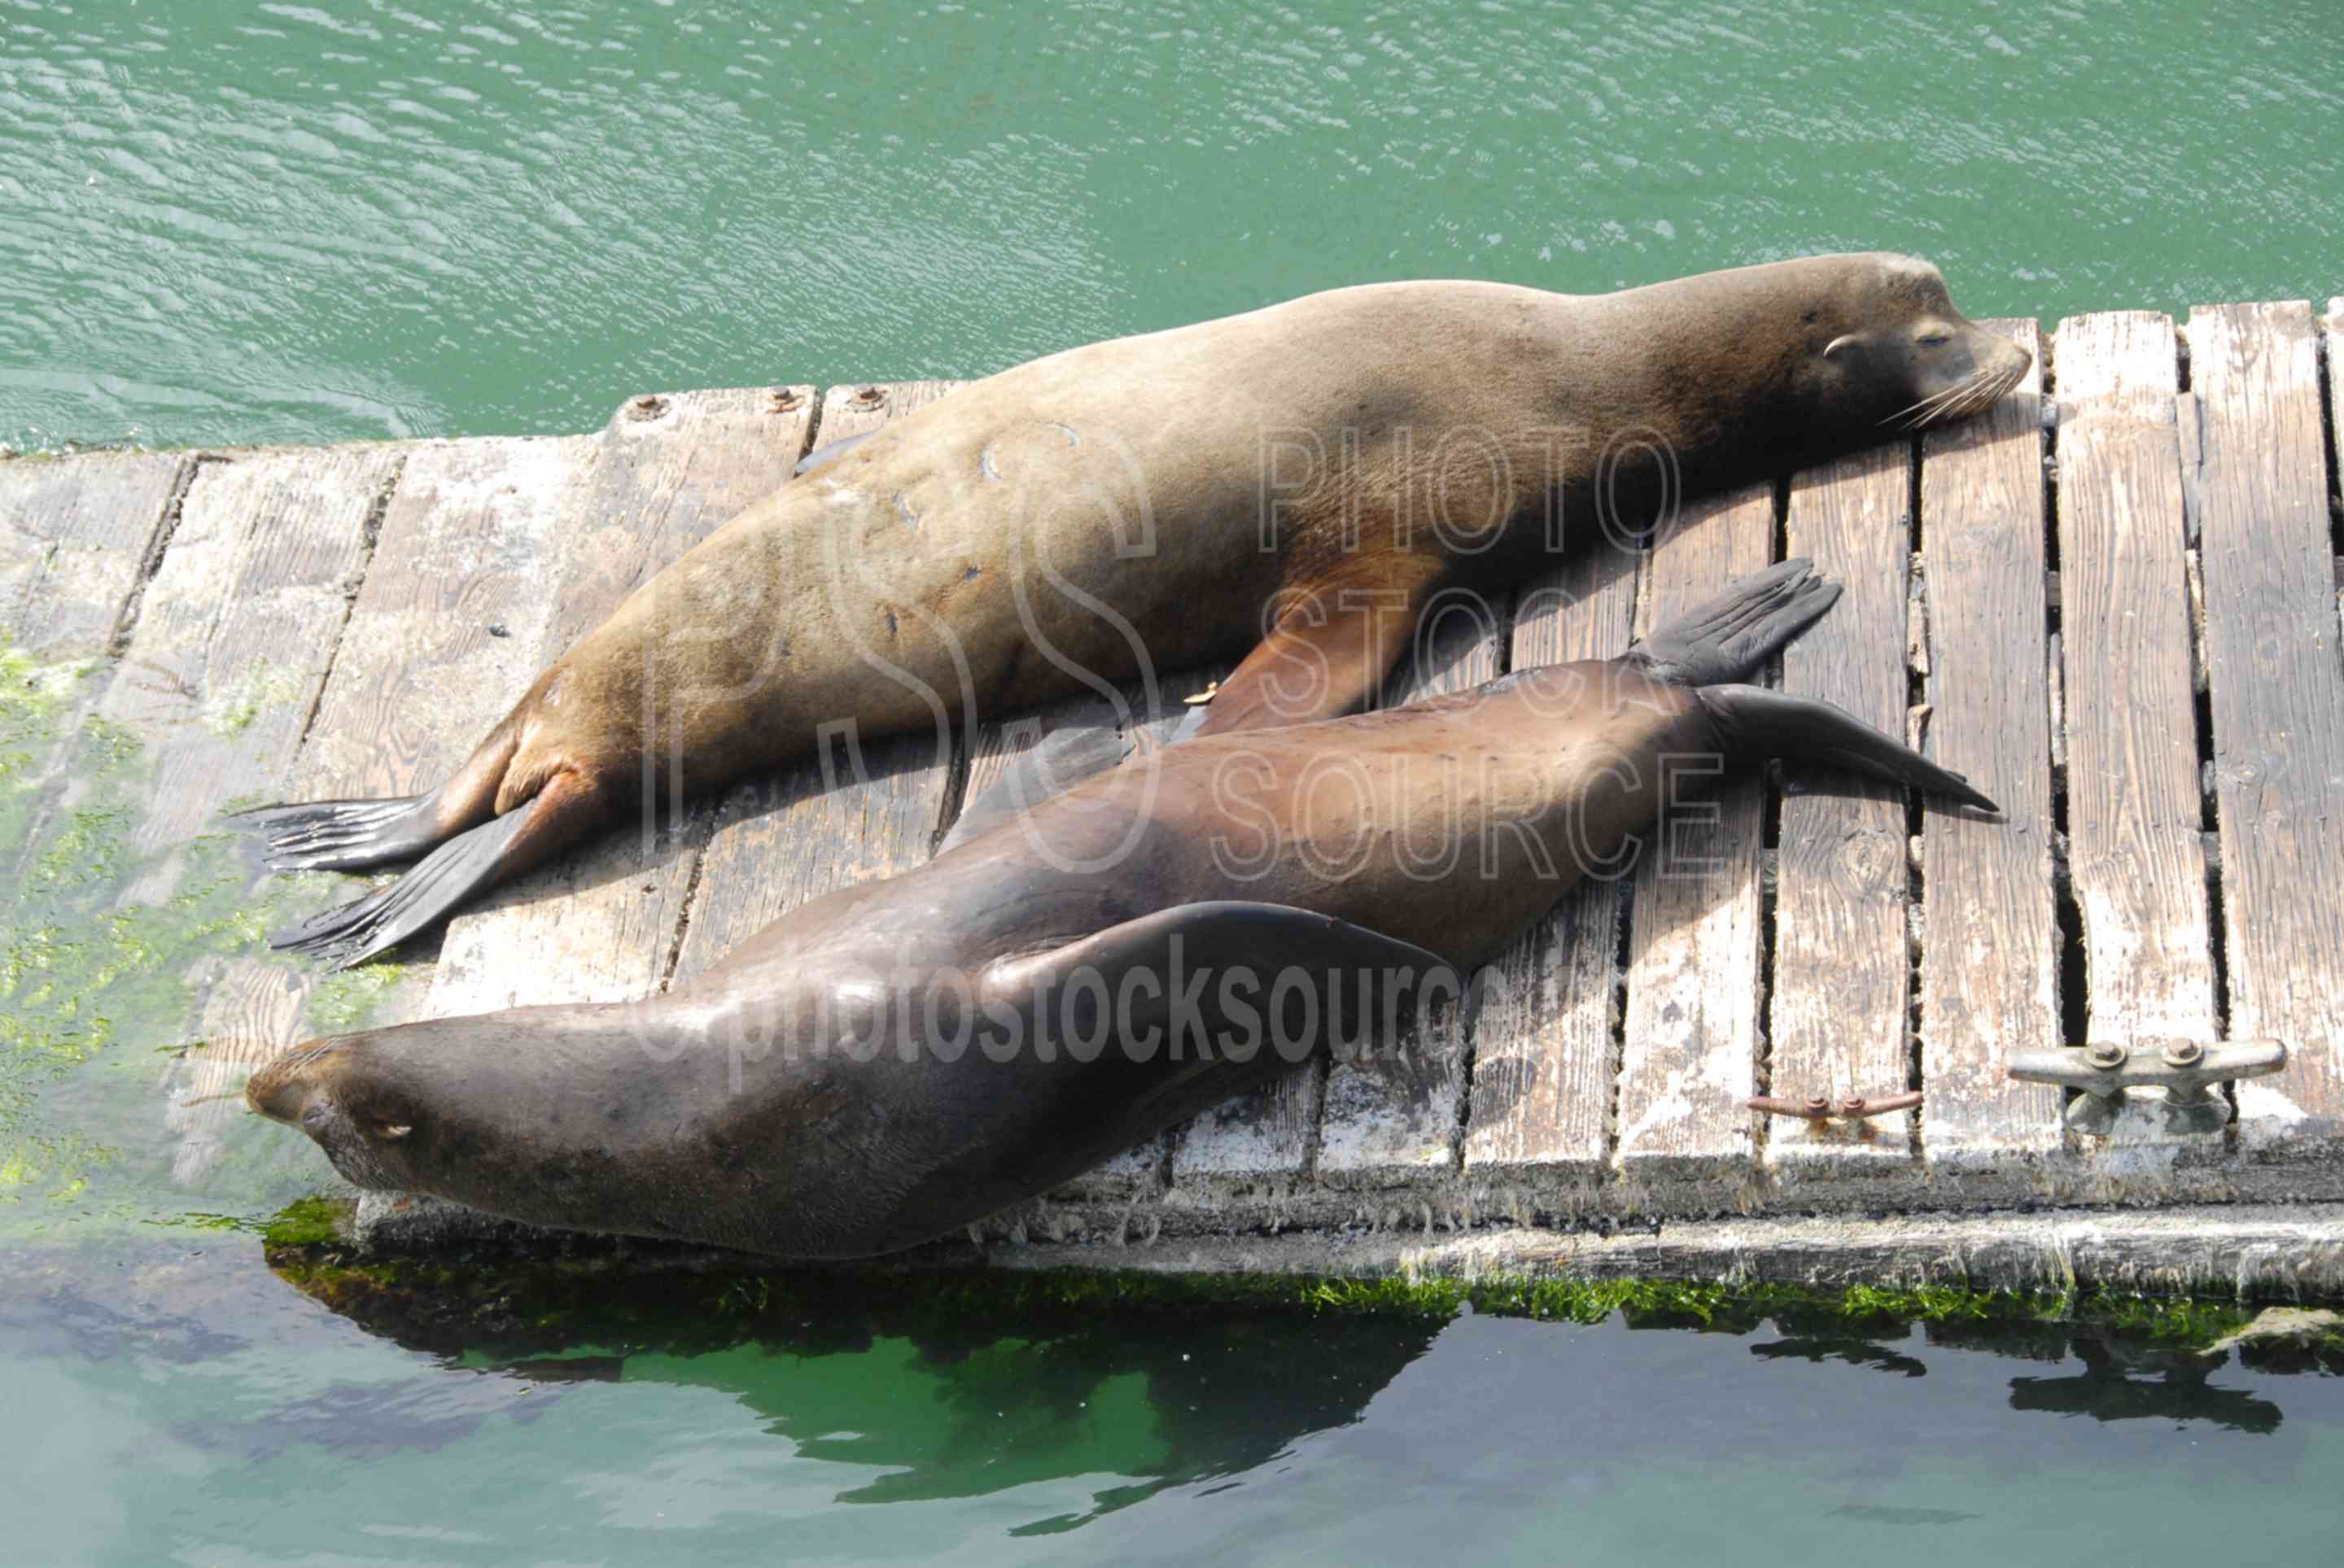 Sea Lions,sea lion,sunning,lazy,sleeping,dock,rest,resting,animals